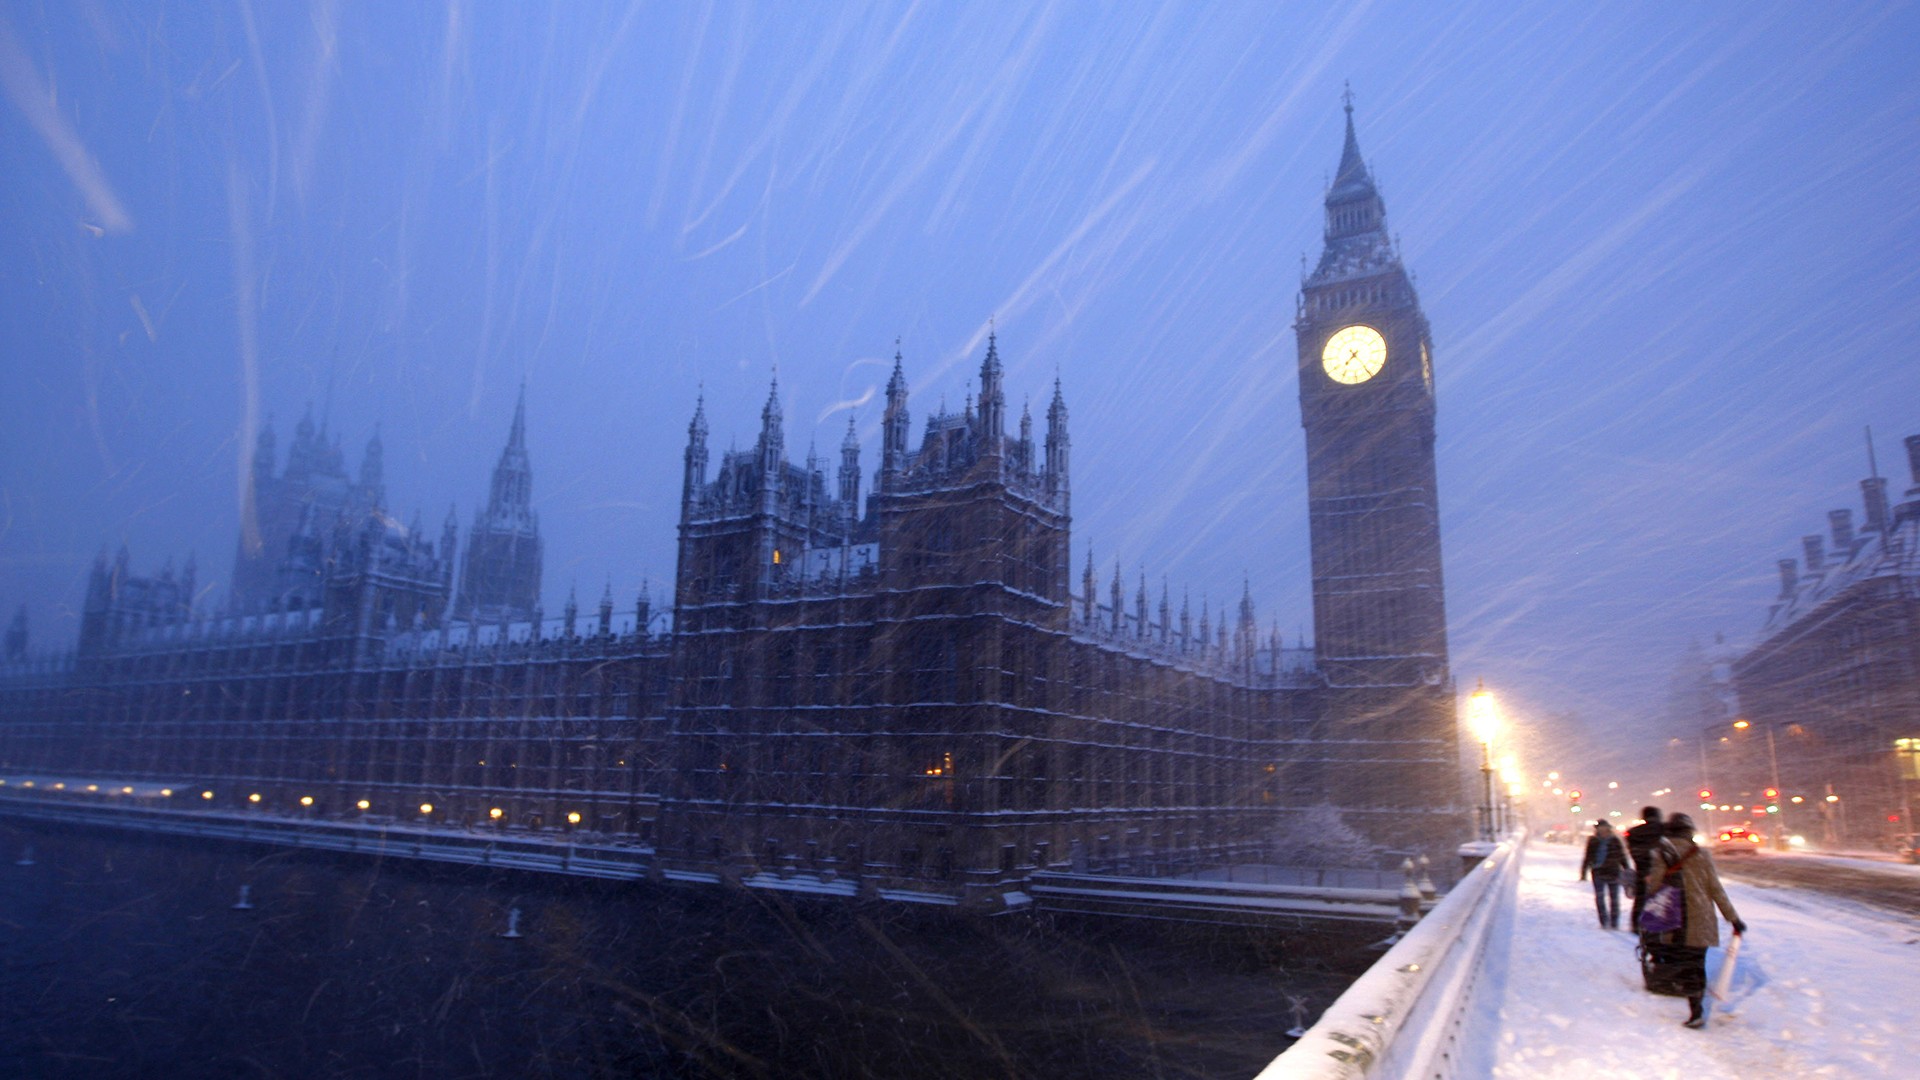 Winter Snow England London Clocks Big Ben United Kingdom Palace Of